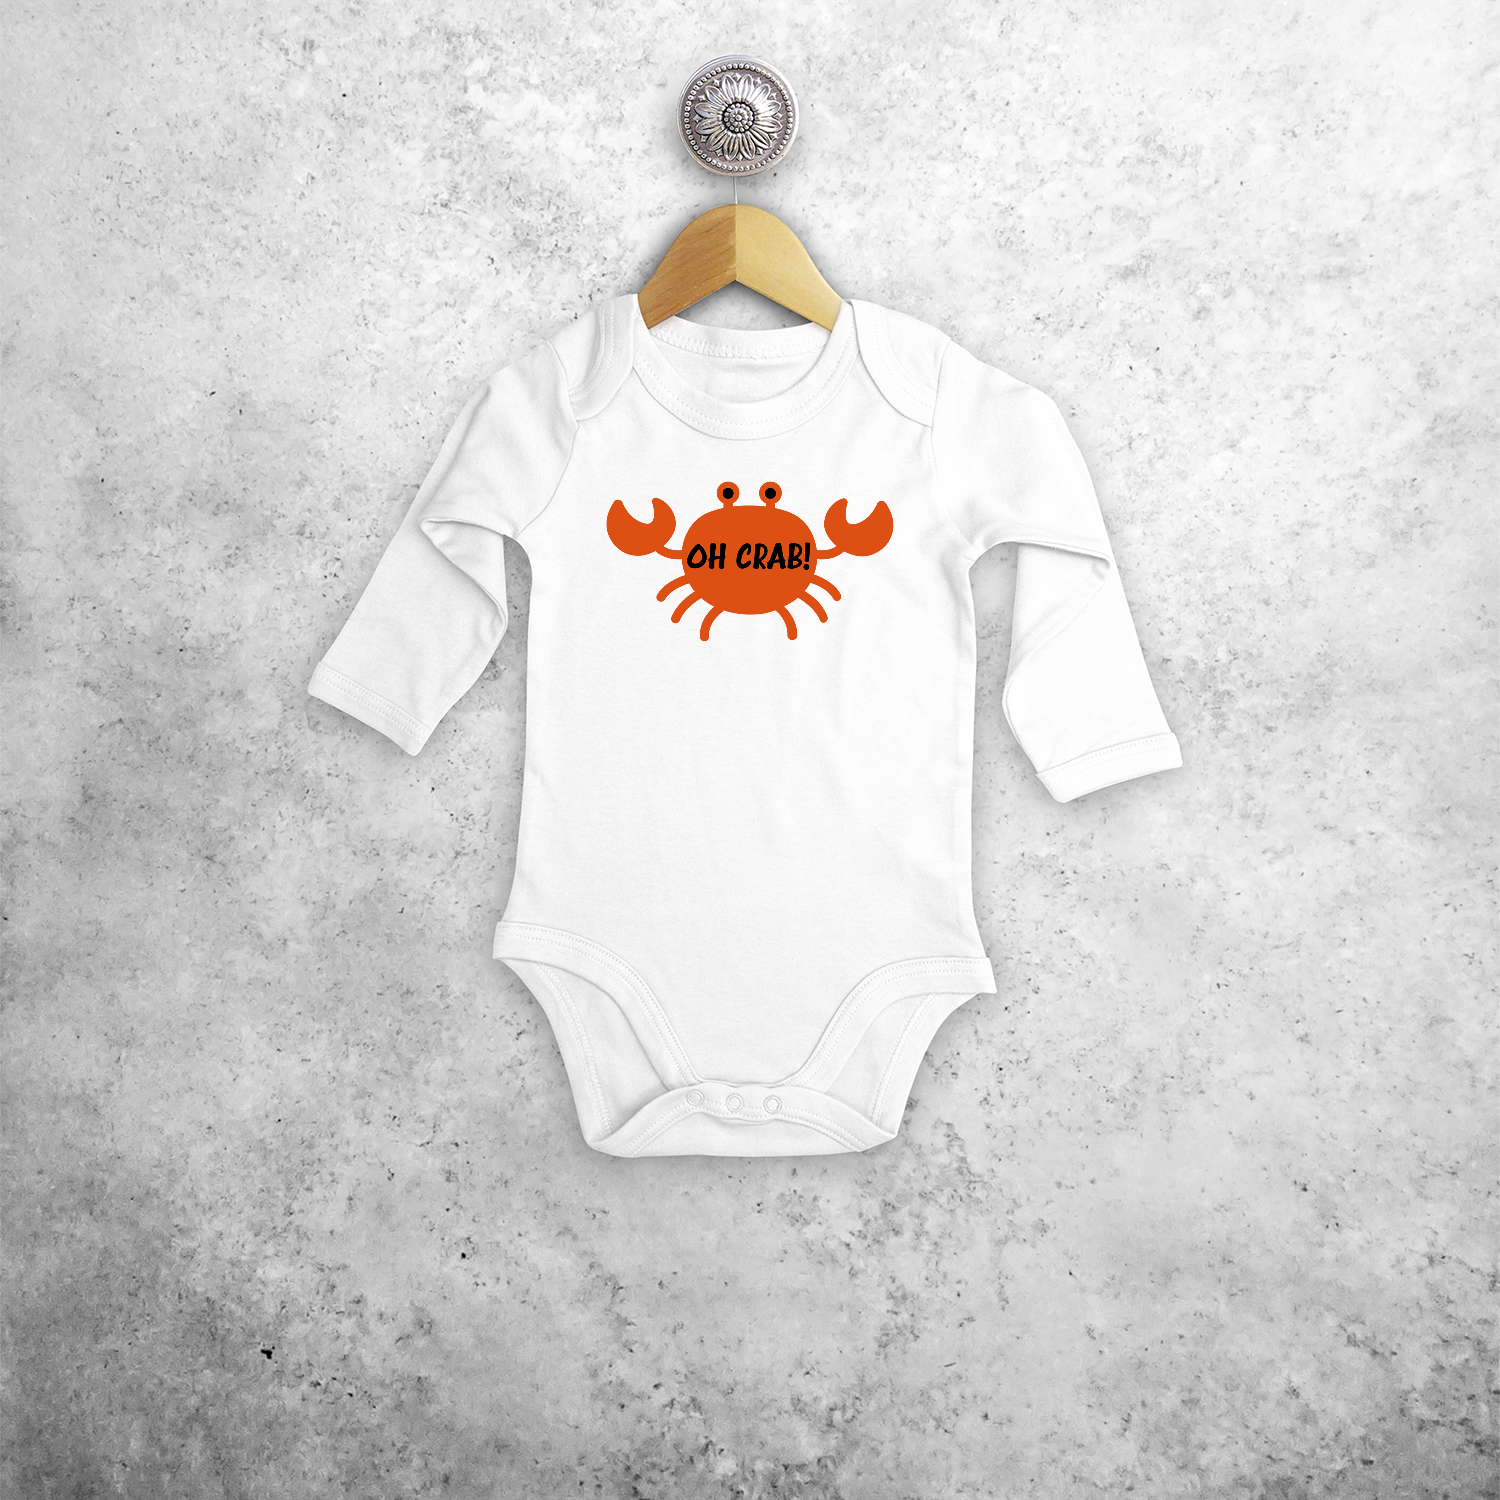 'Oh crab!' baby longsleeve bodysuit